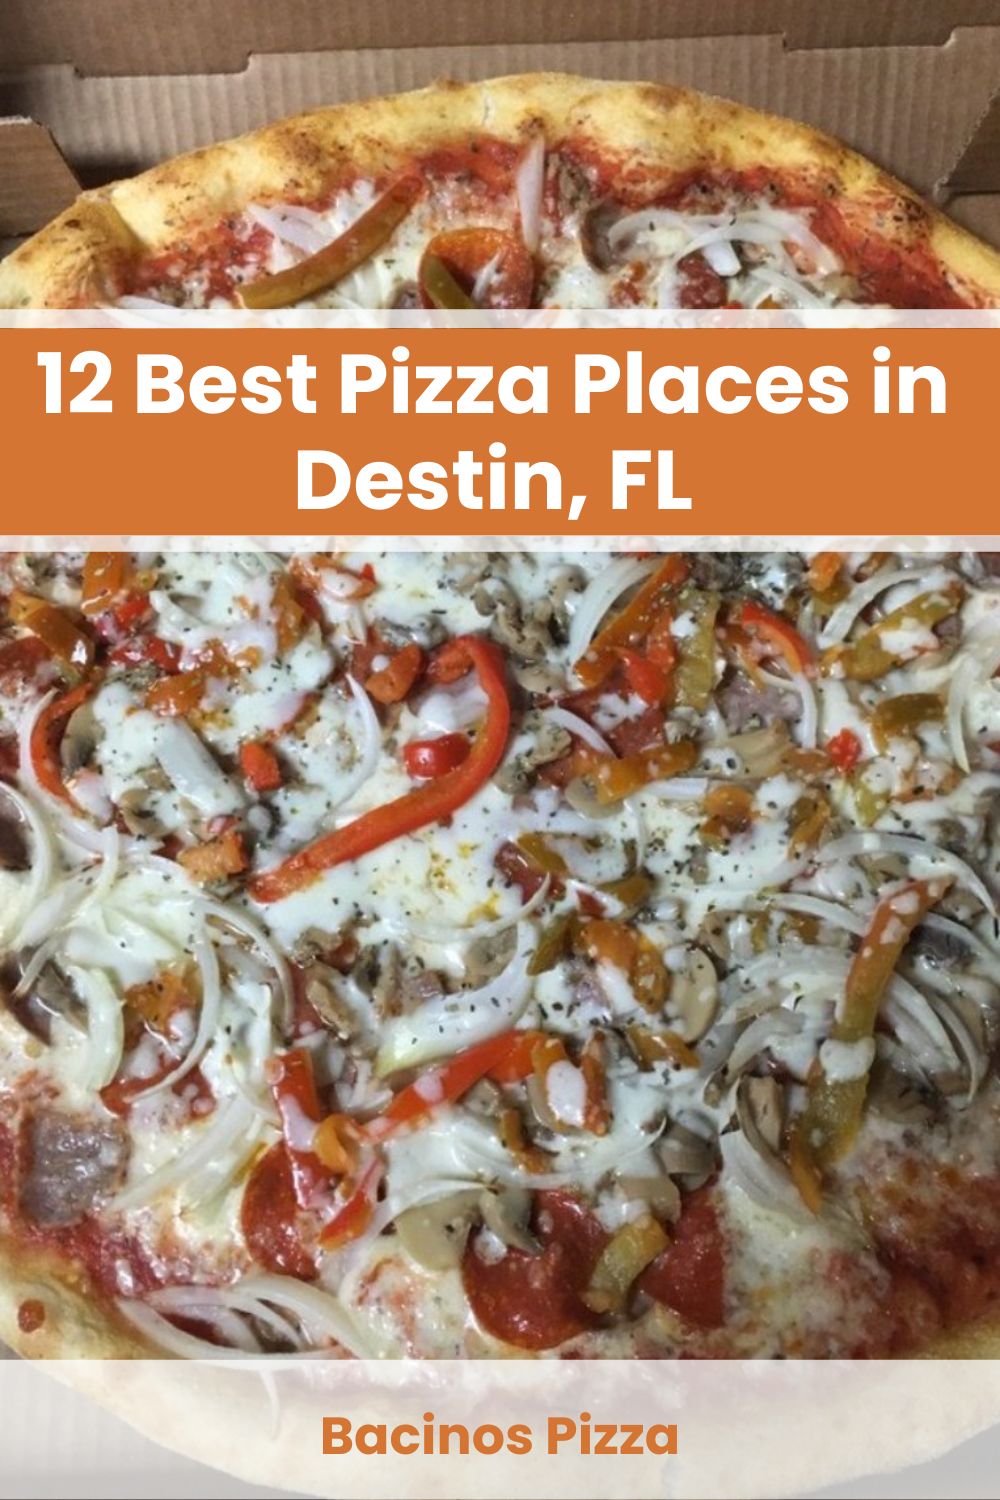 Best Pizza Places in Destin, FL